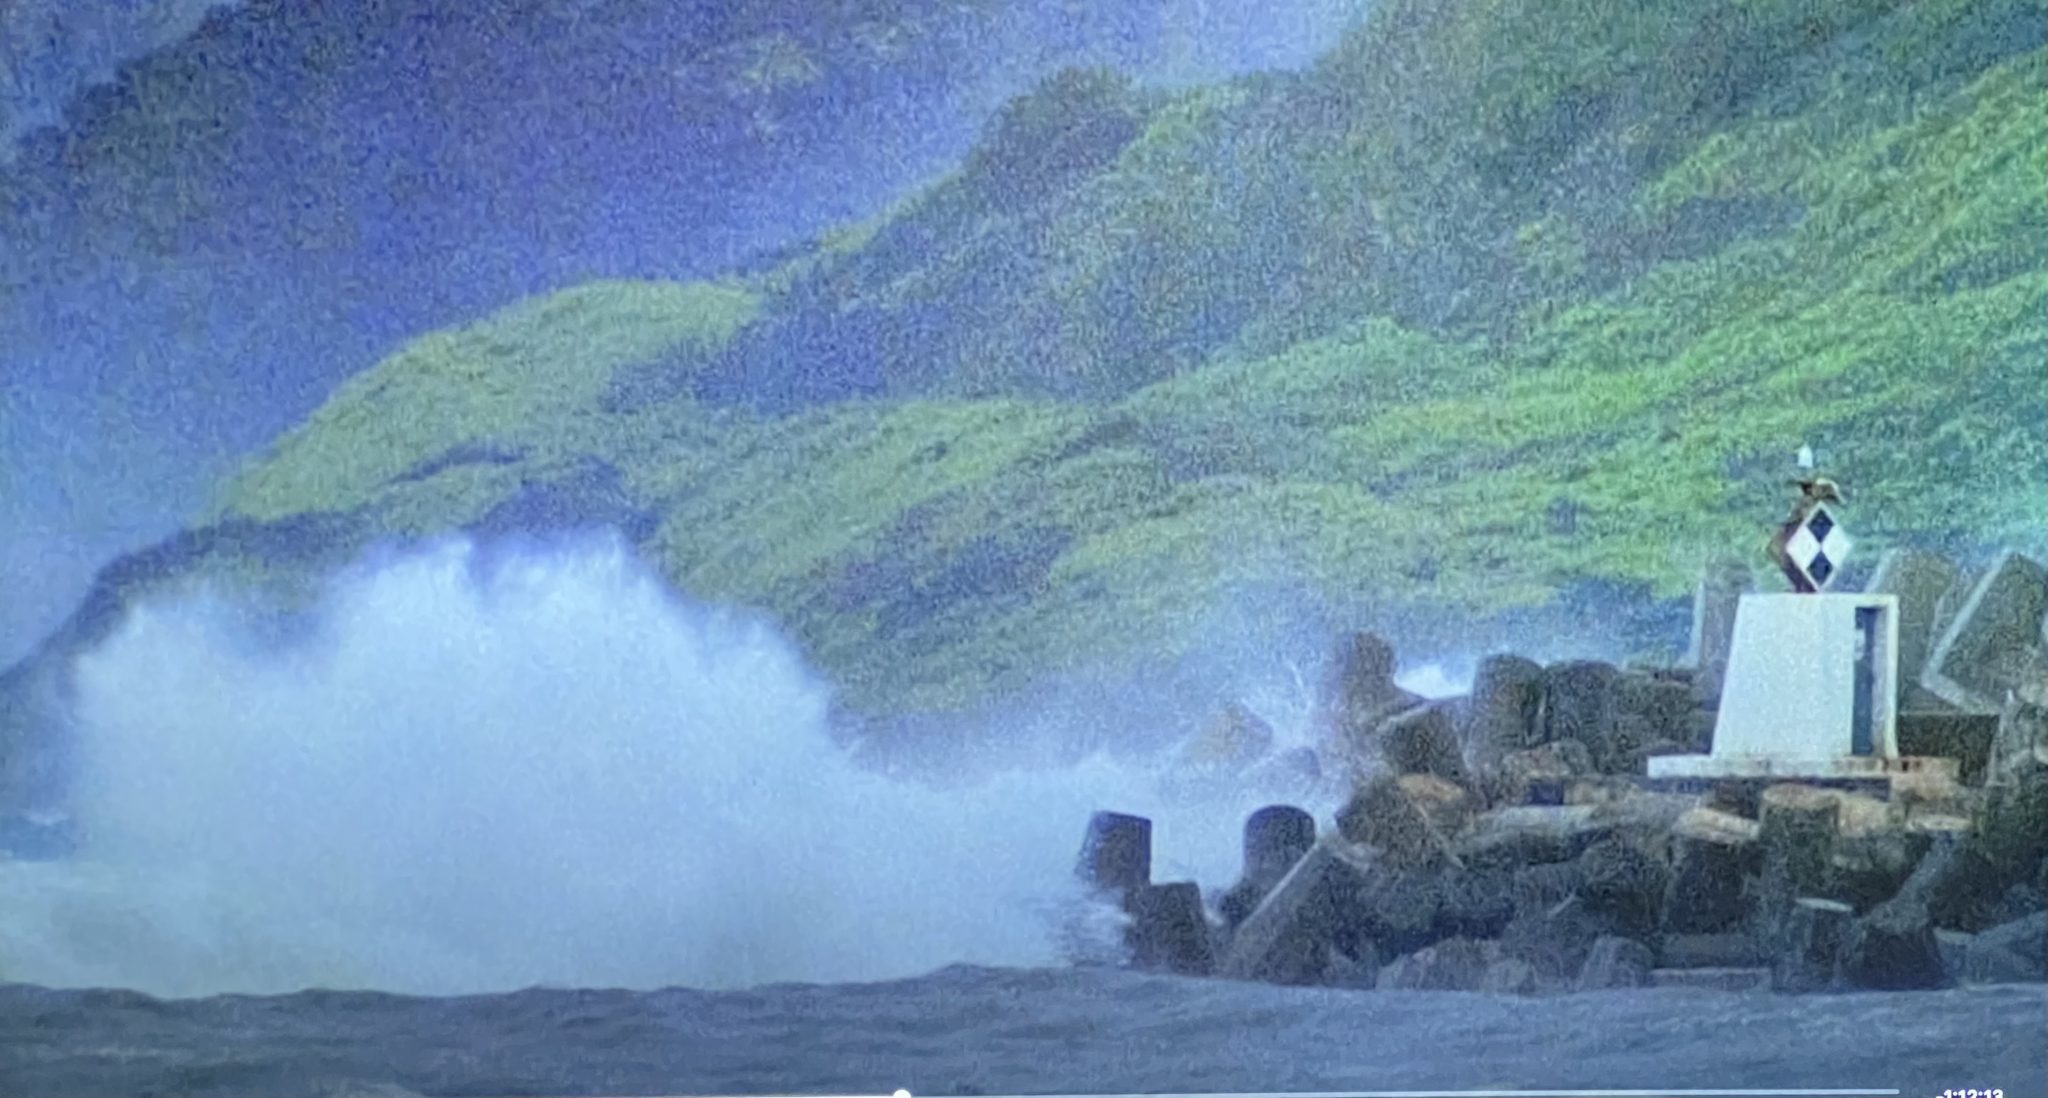 Nāwiliwili Bay Jetty, Jurassic Park movie scene.